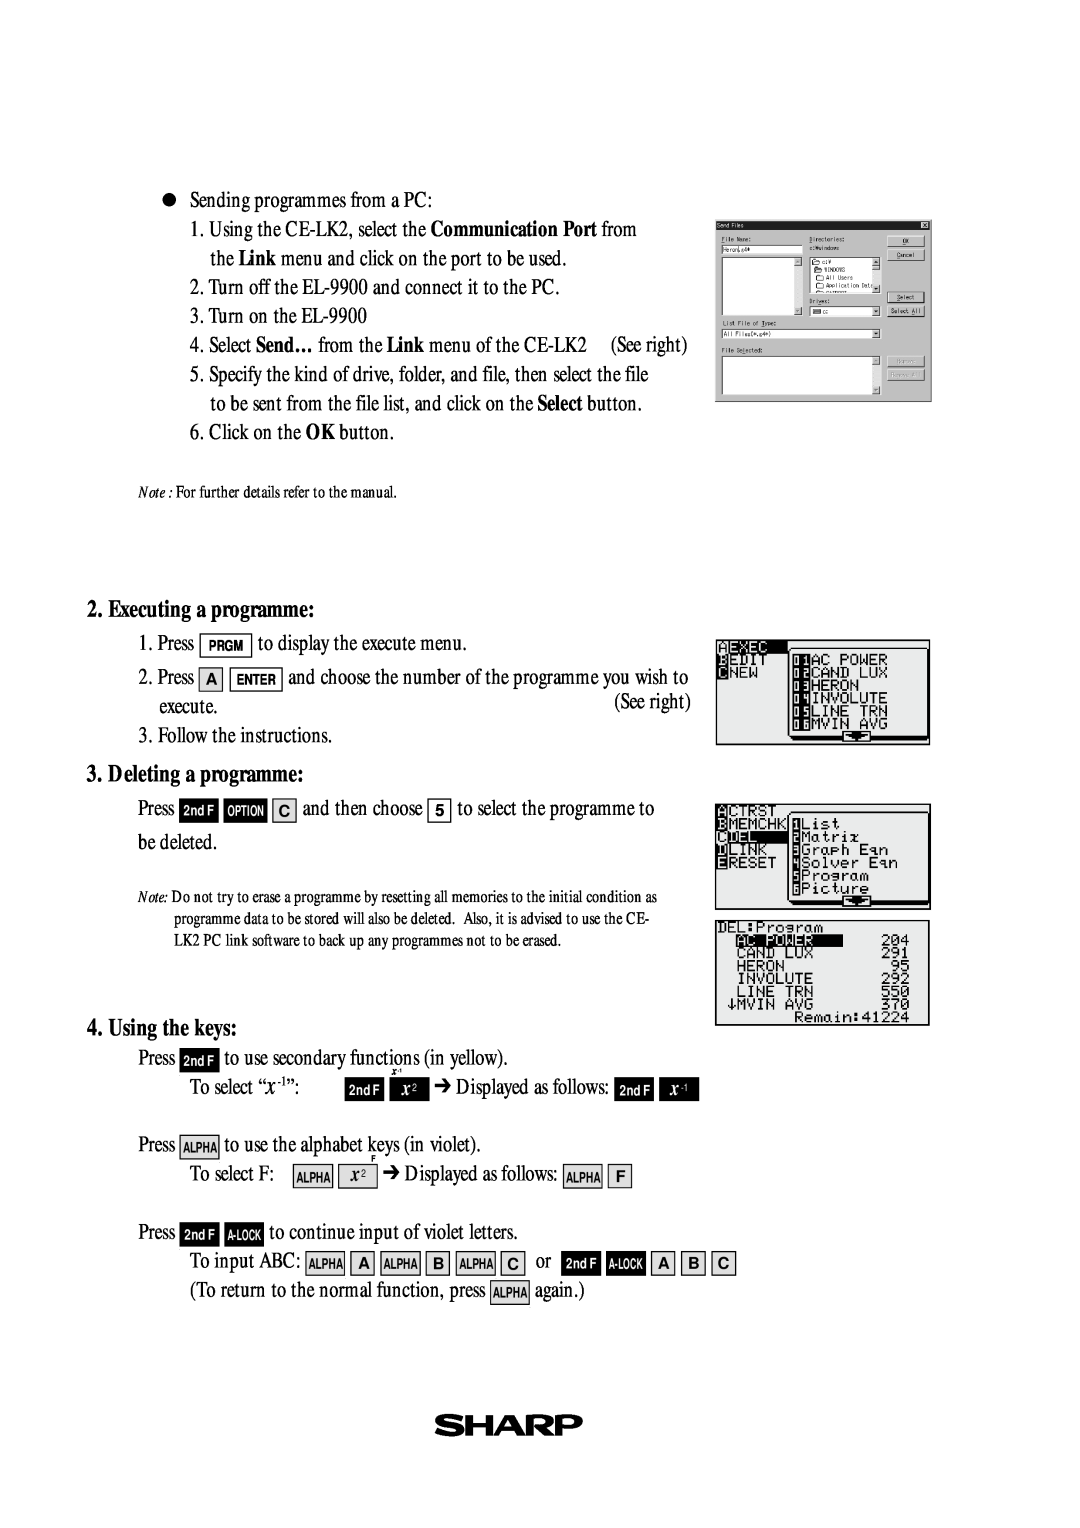 Sharp EL-9900 manual Executing a programme, Deleting a programme, Using the keys 